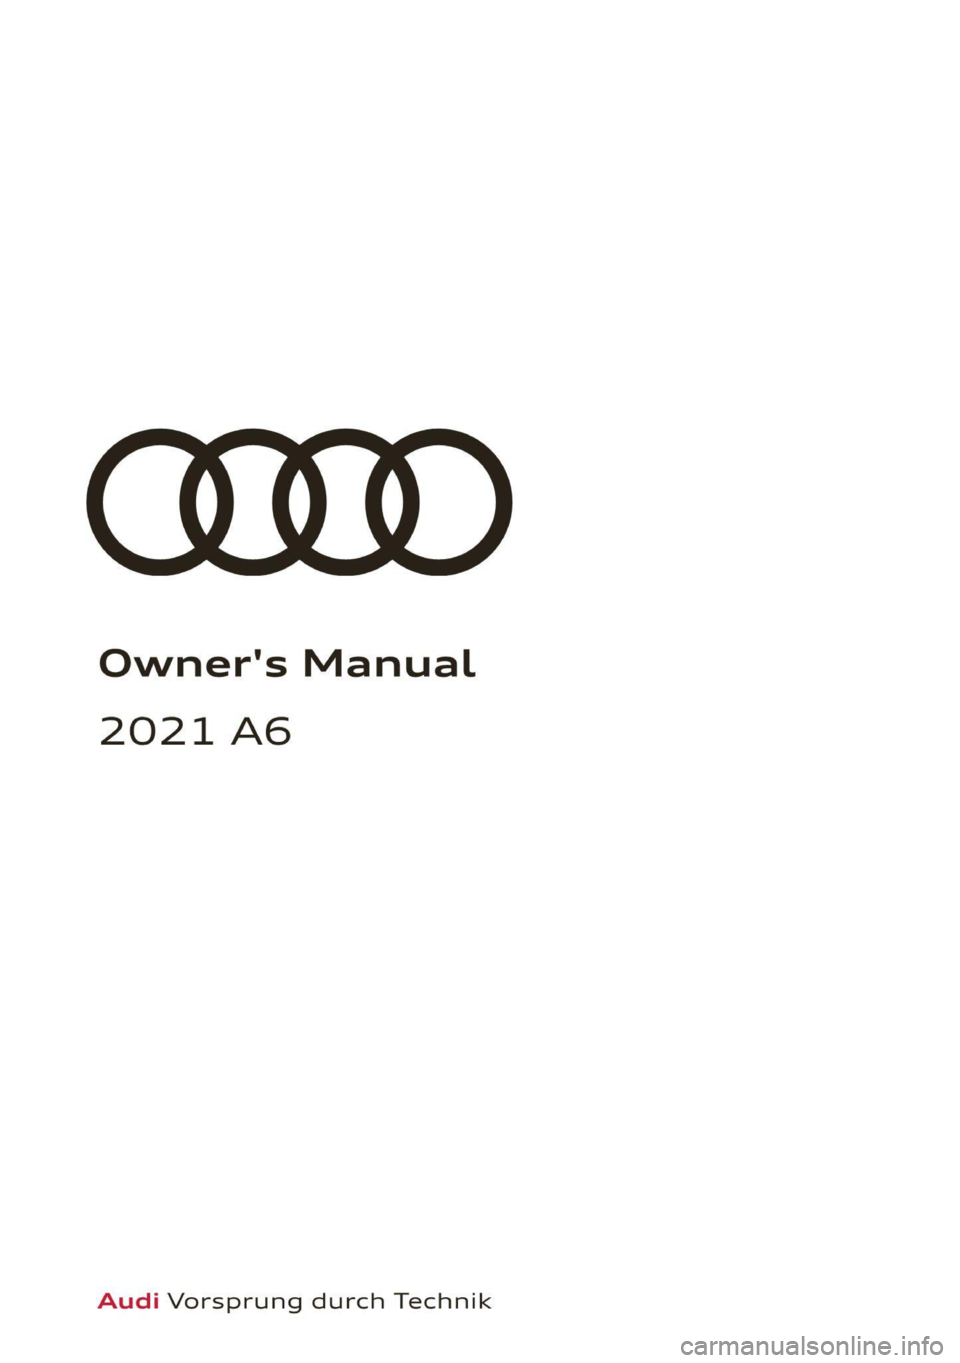 AUDI A6 2021  Owner´s Manual Owner's Manual 
2021 A6 
Audi Vorsprung durch Technik  